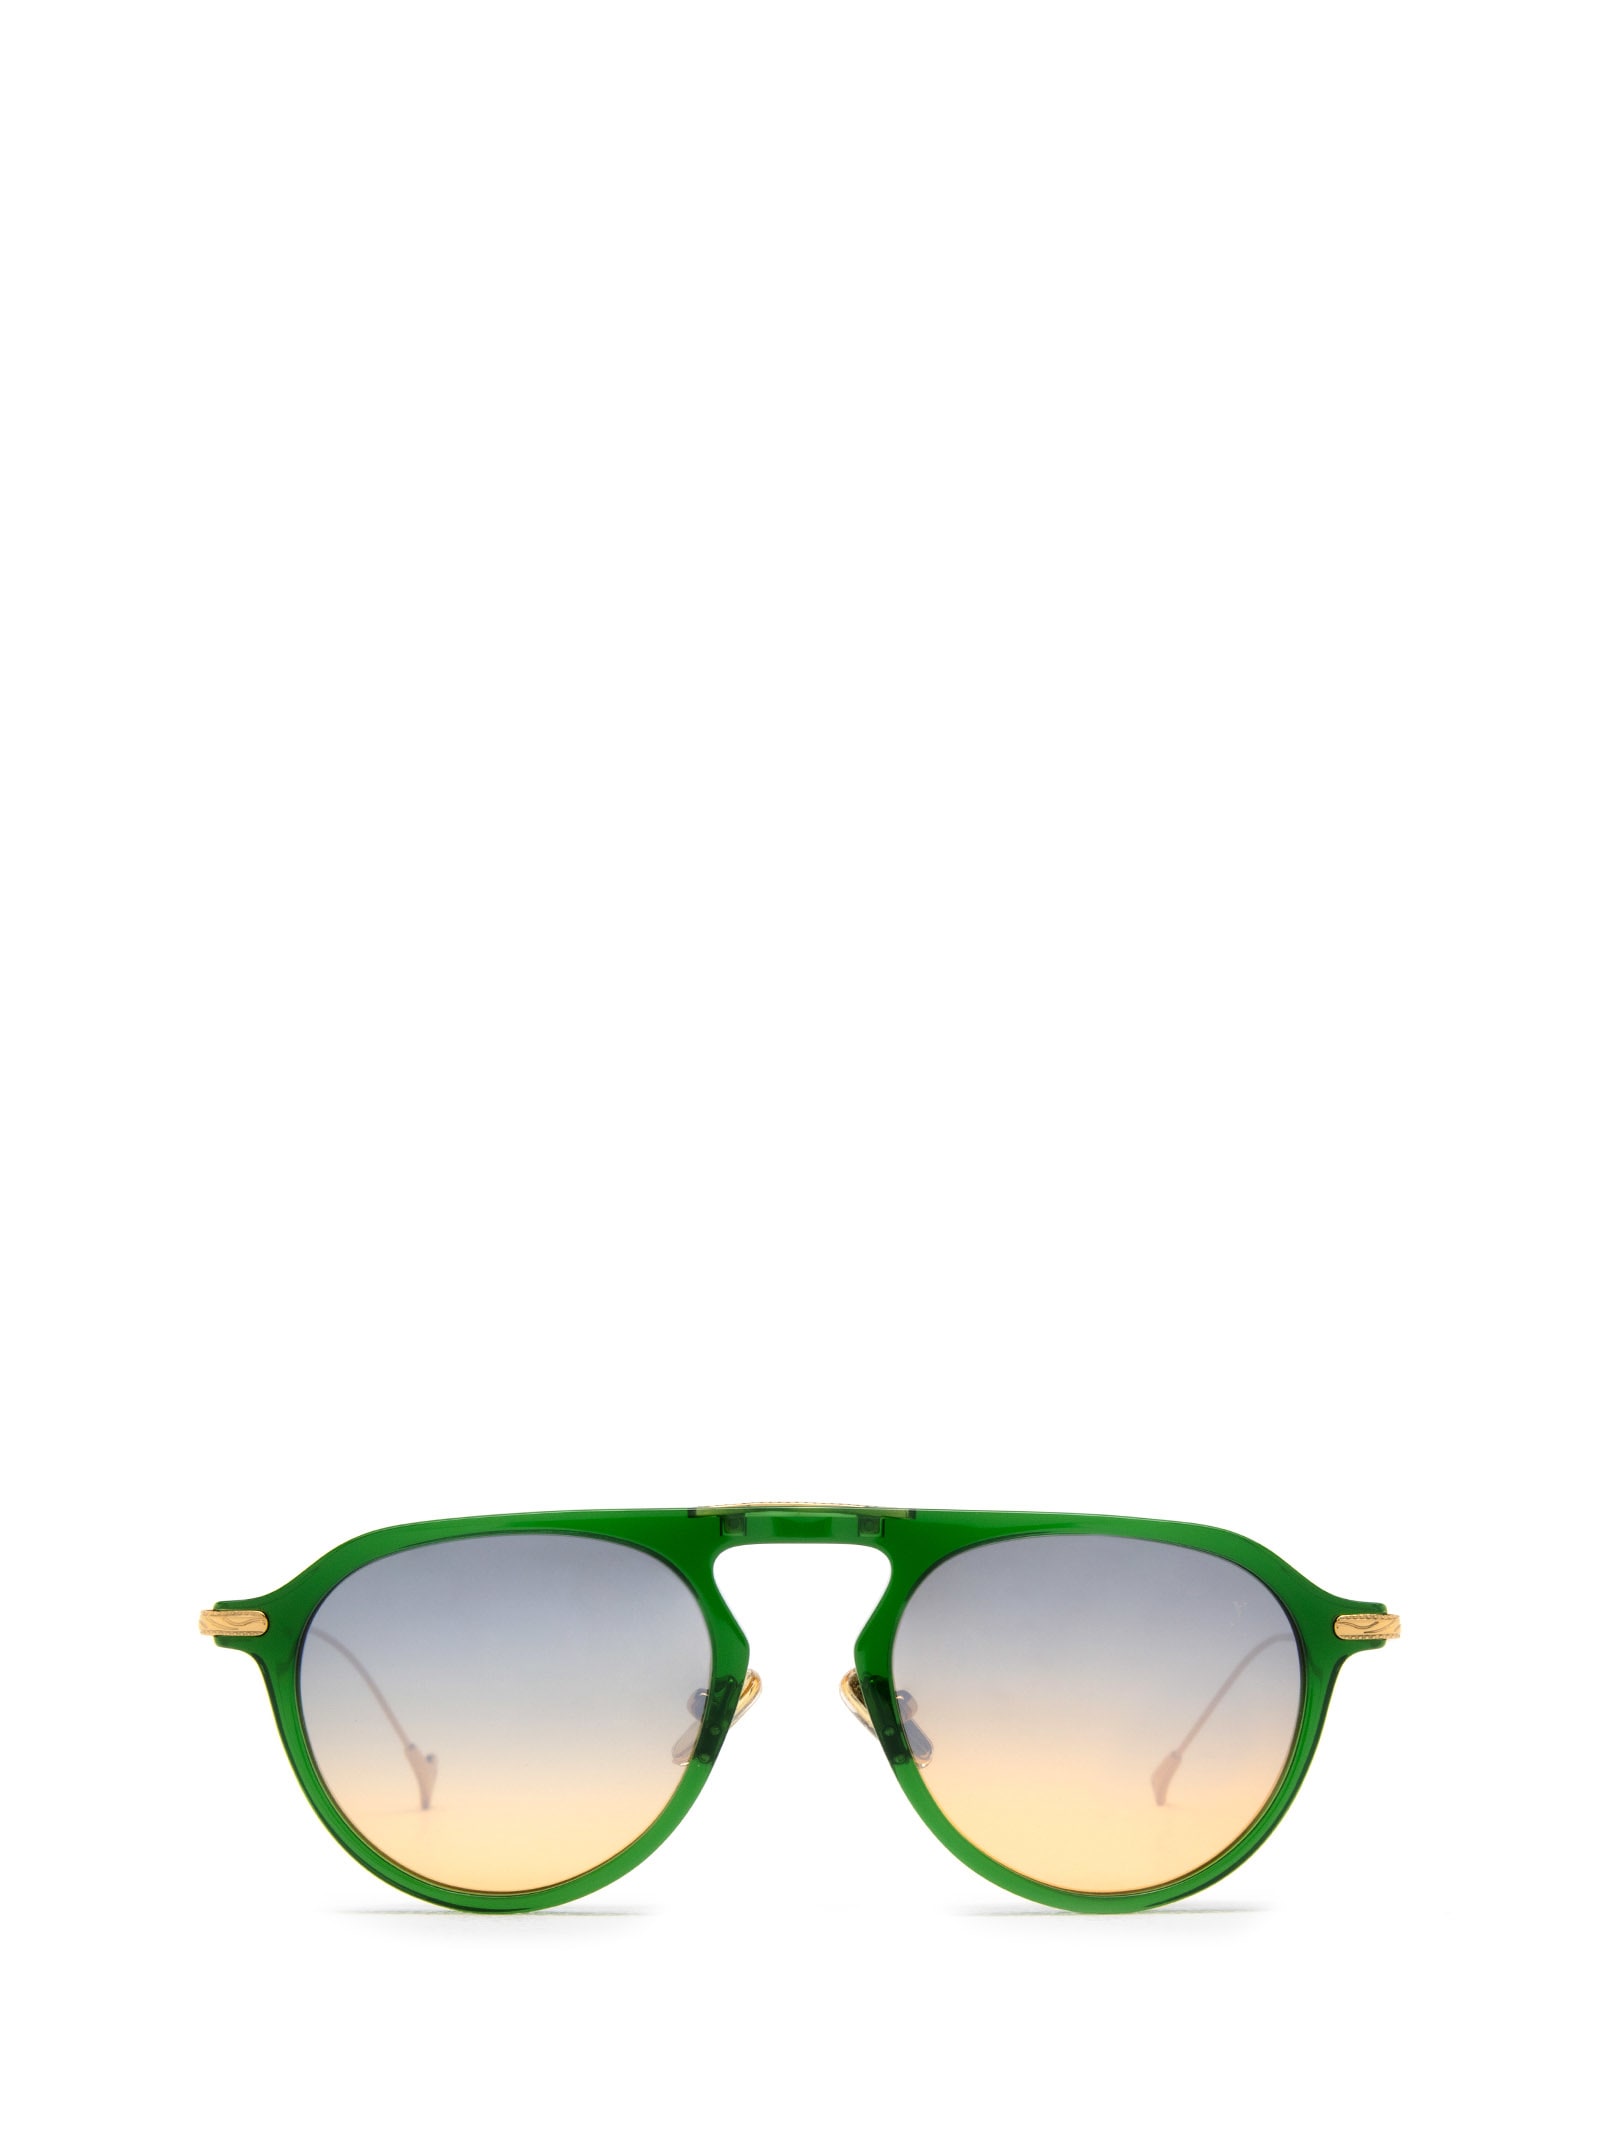 Steven Transparent Green Sunglasses